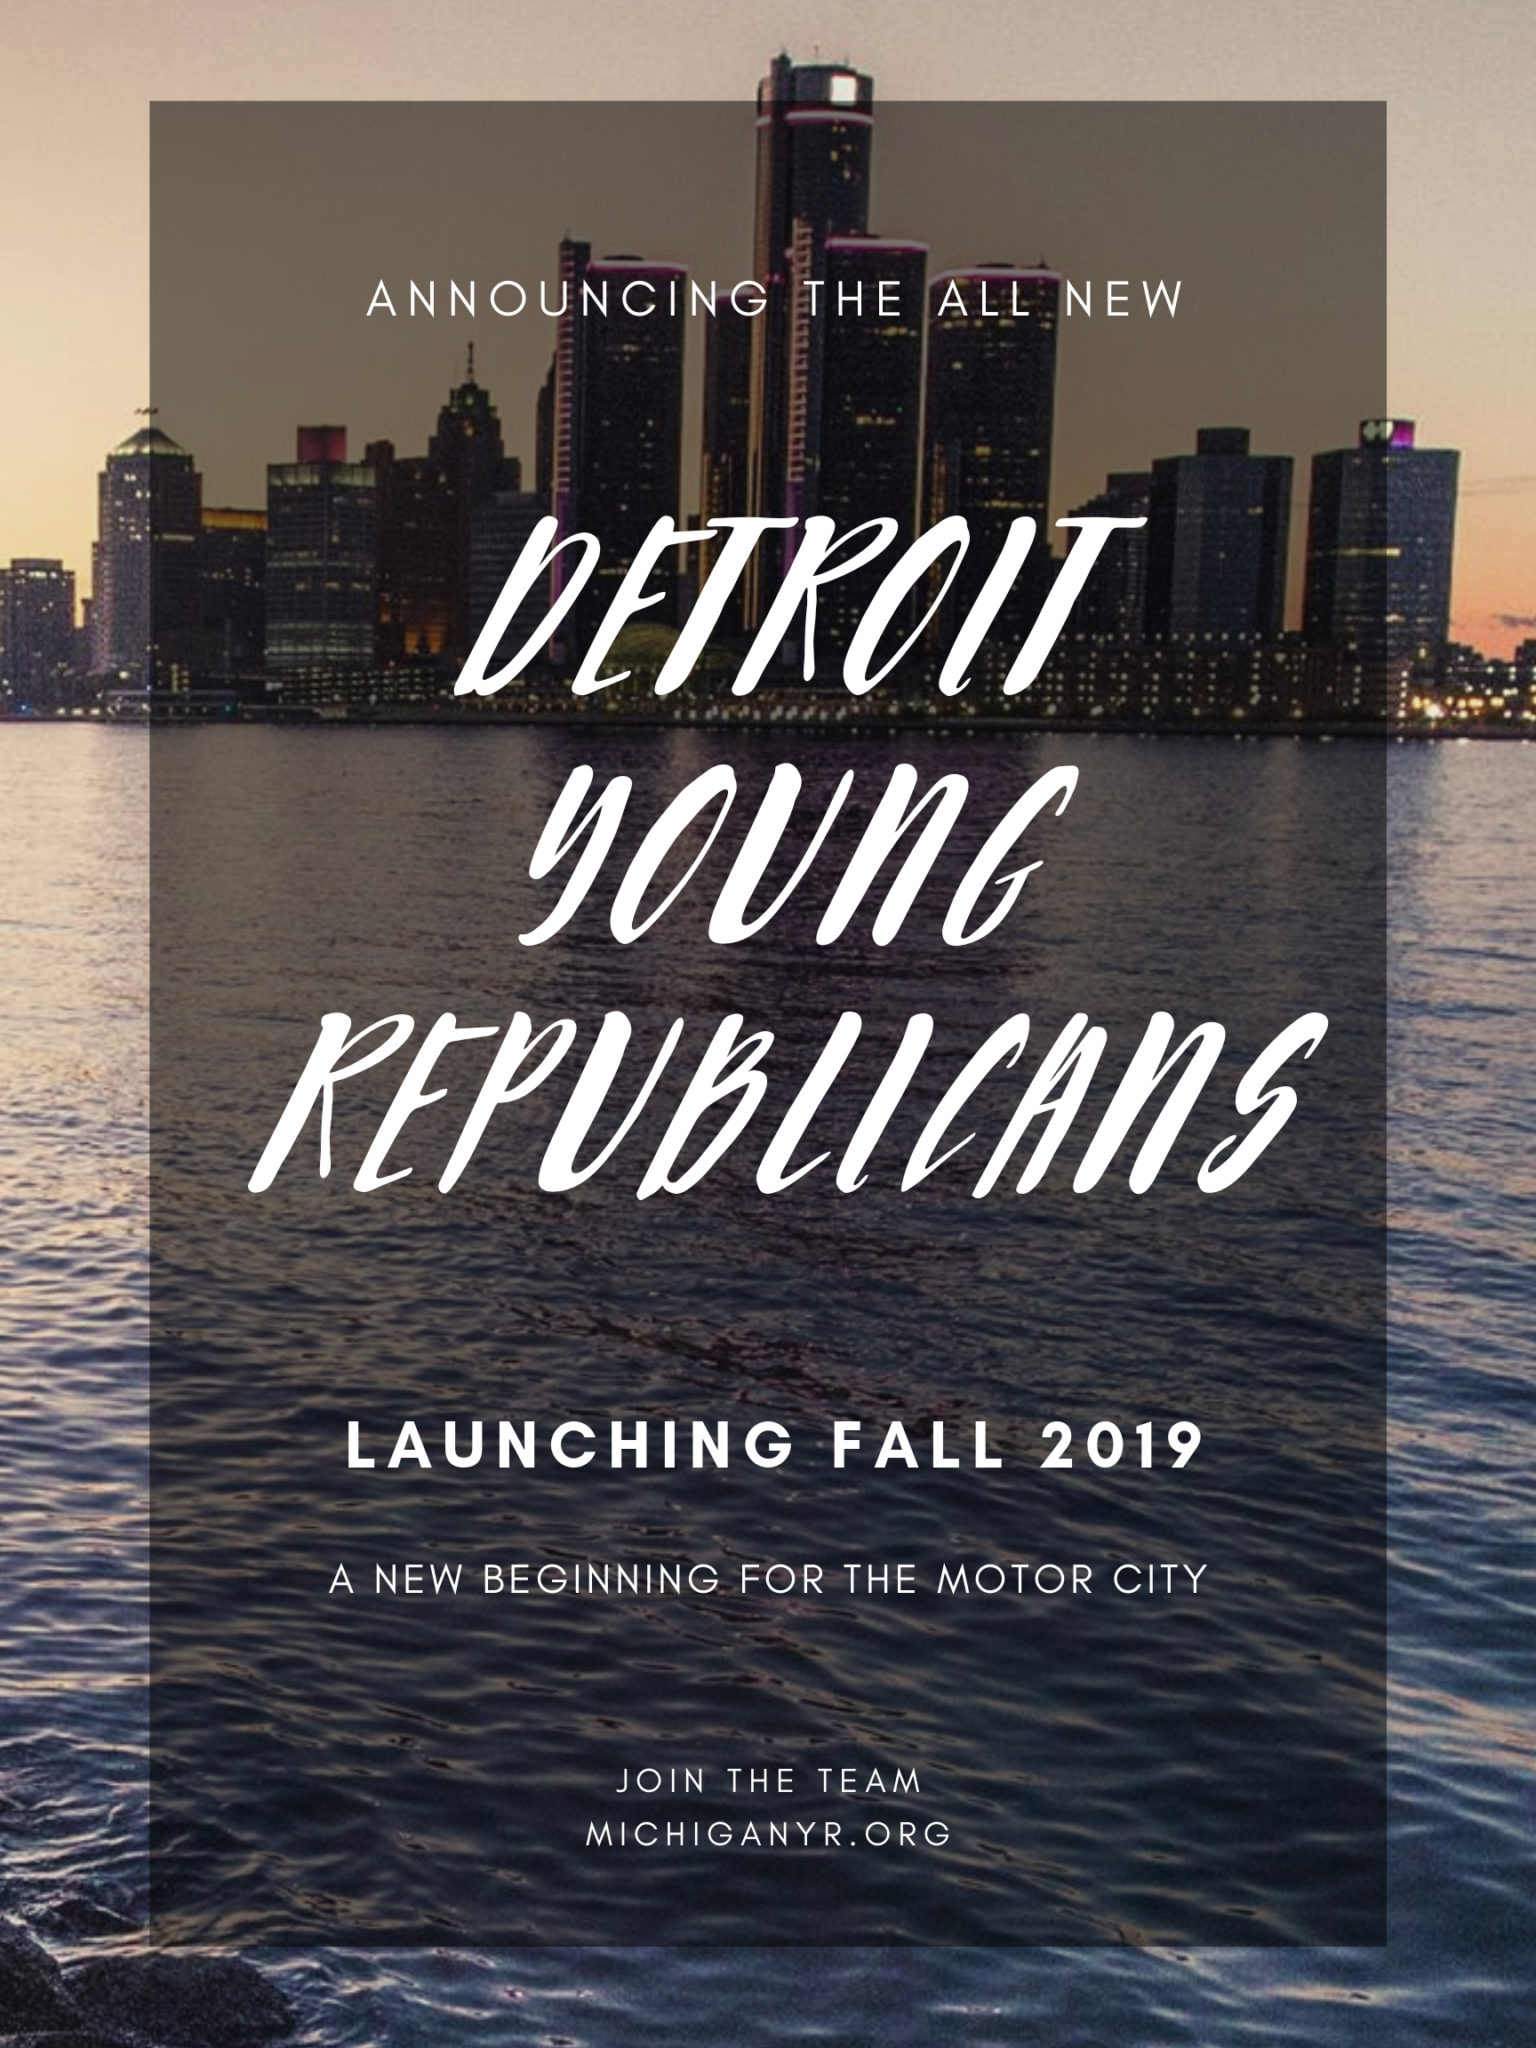 Detroit Coming Soon